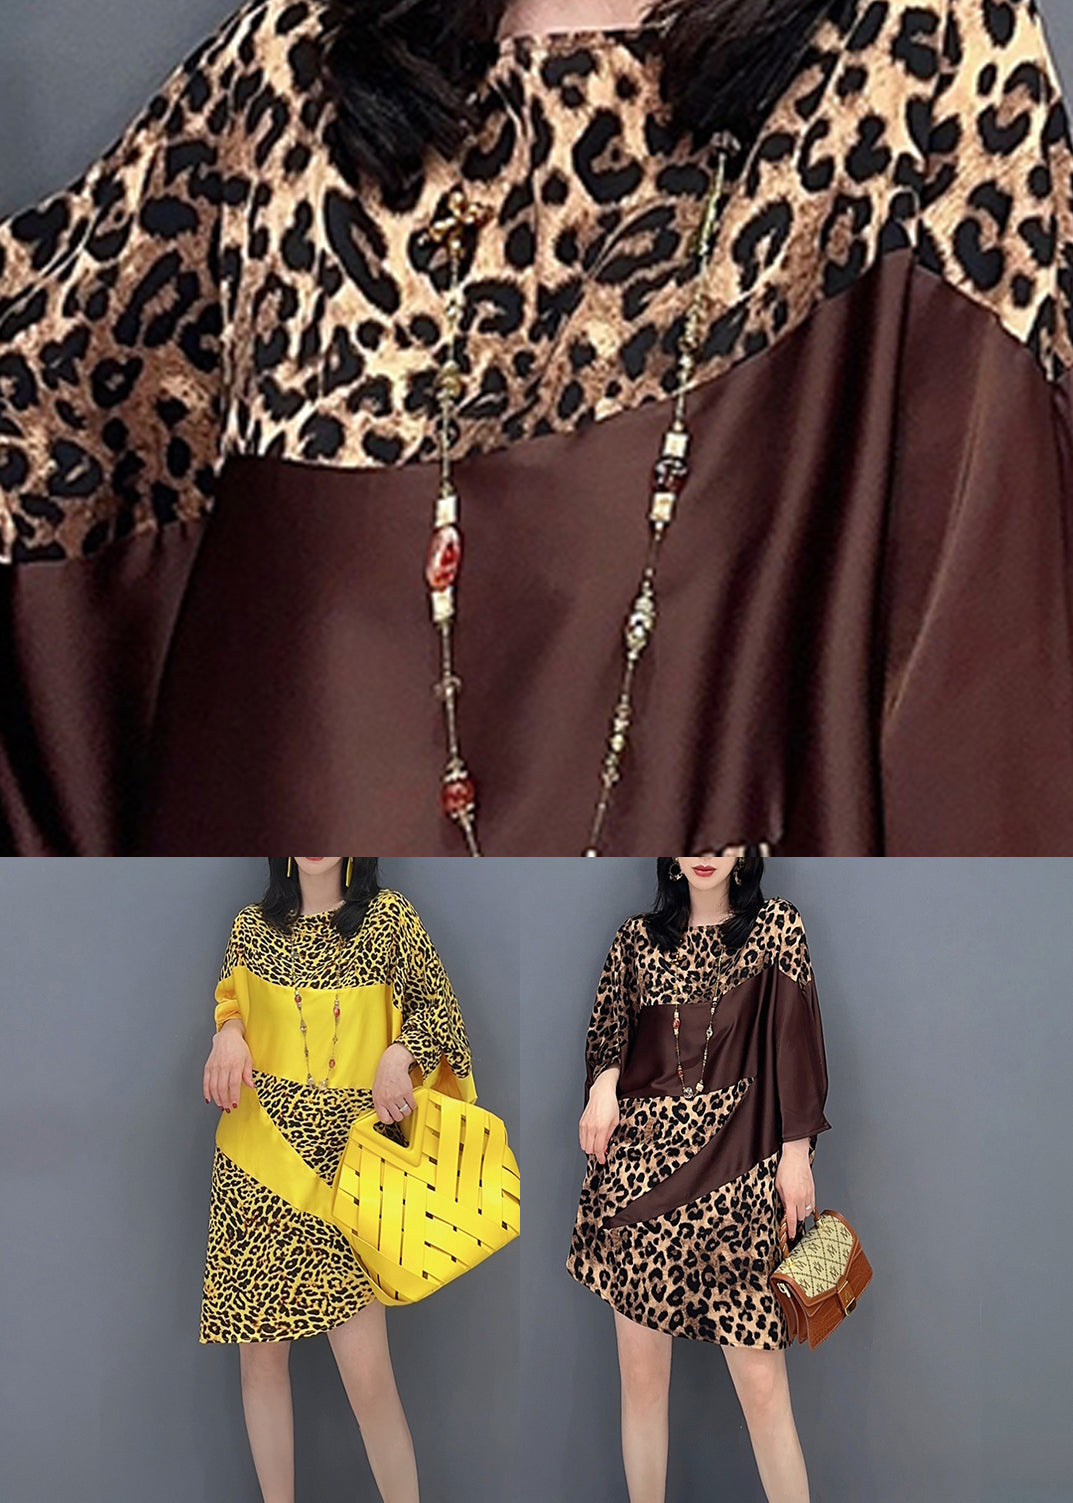 Beautiful Chocolate O-Neck Leopard Print Maxi Dresses Spring